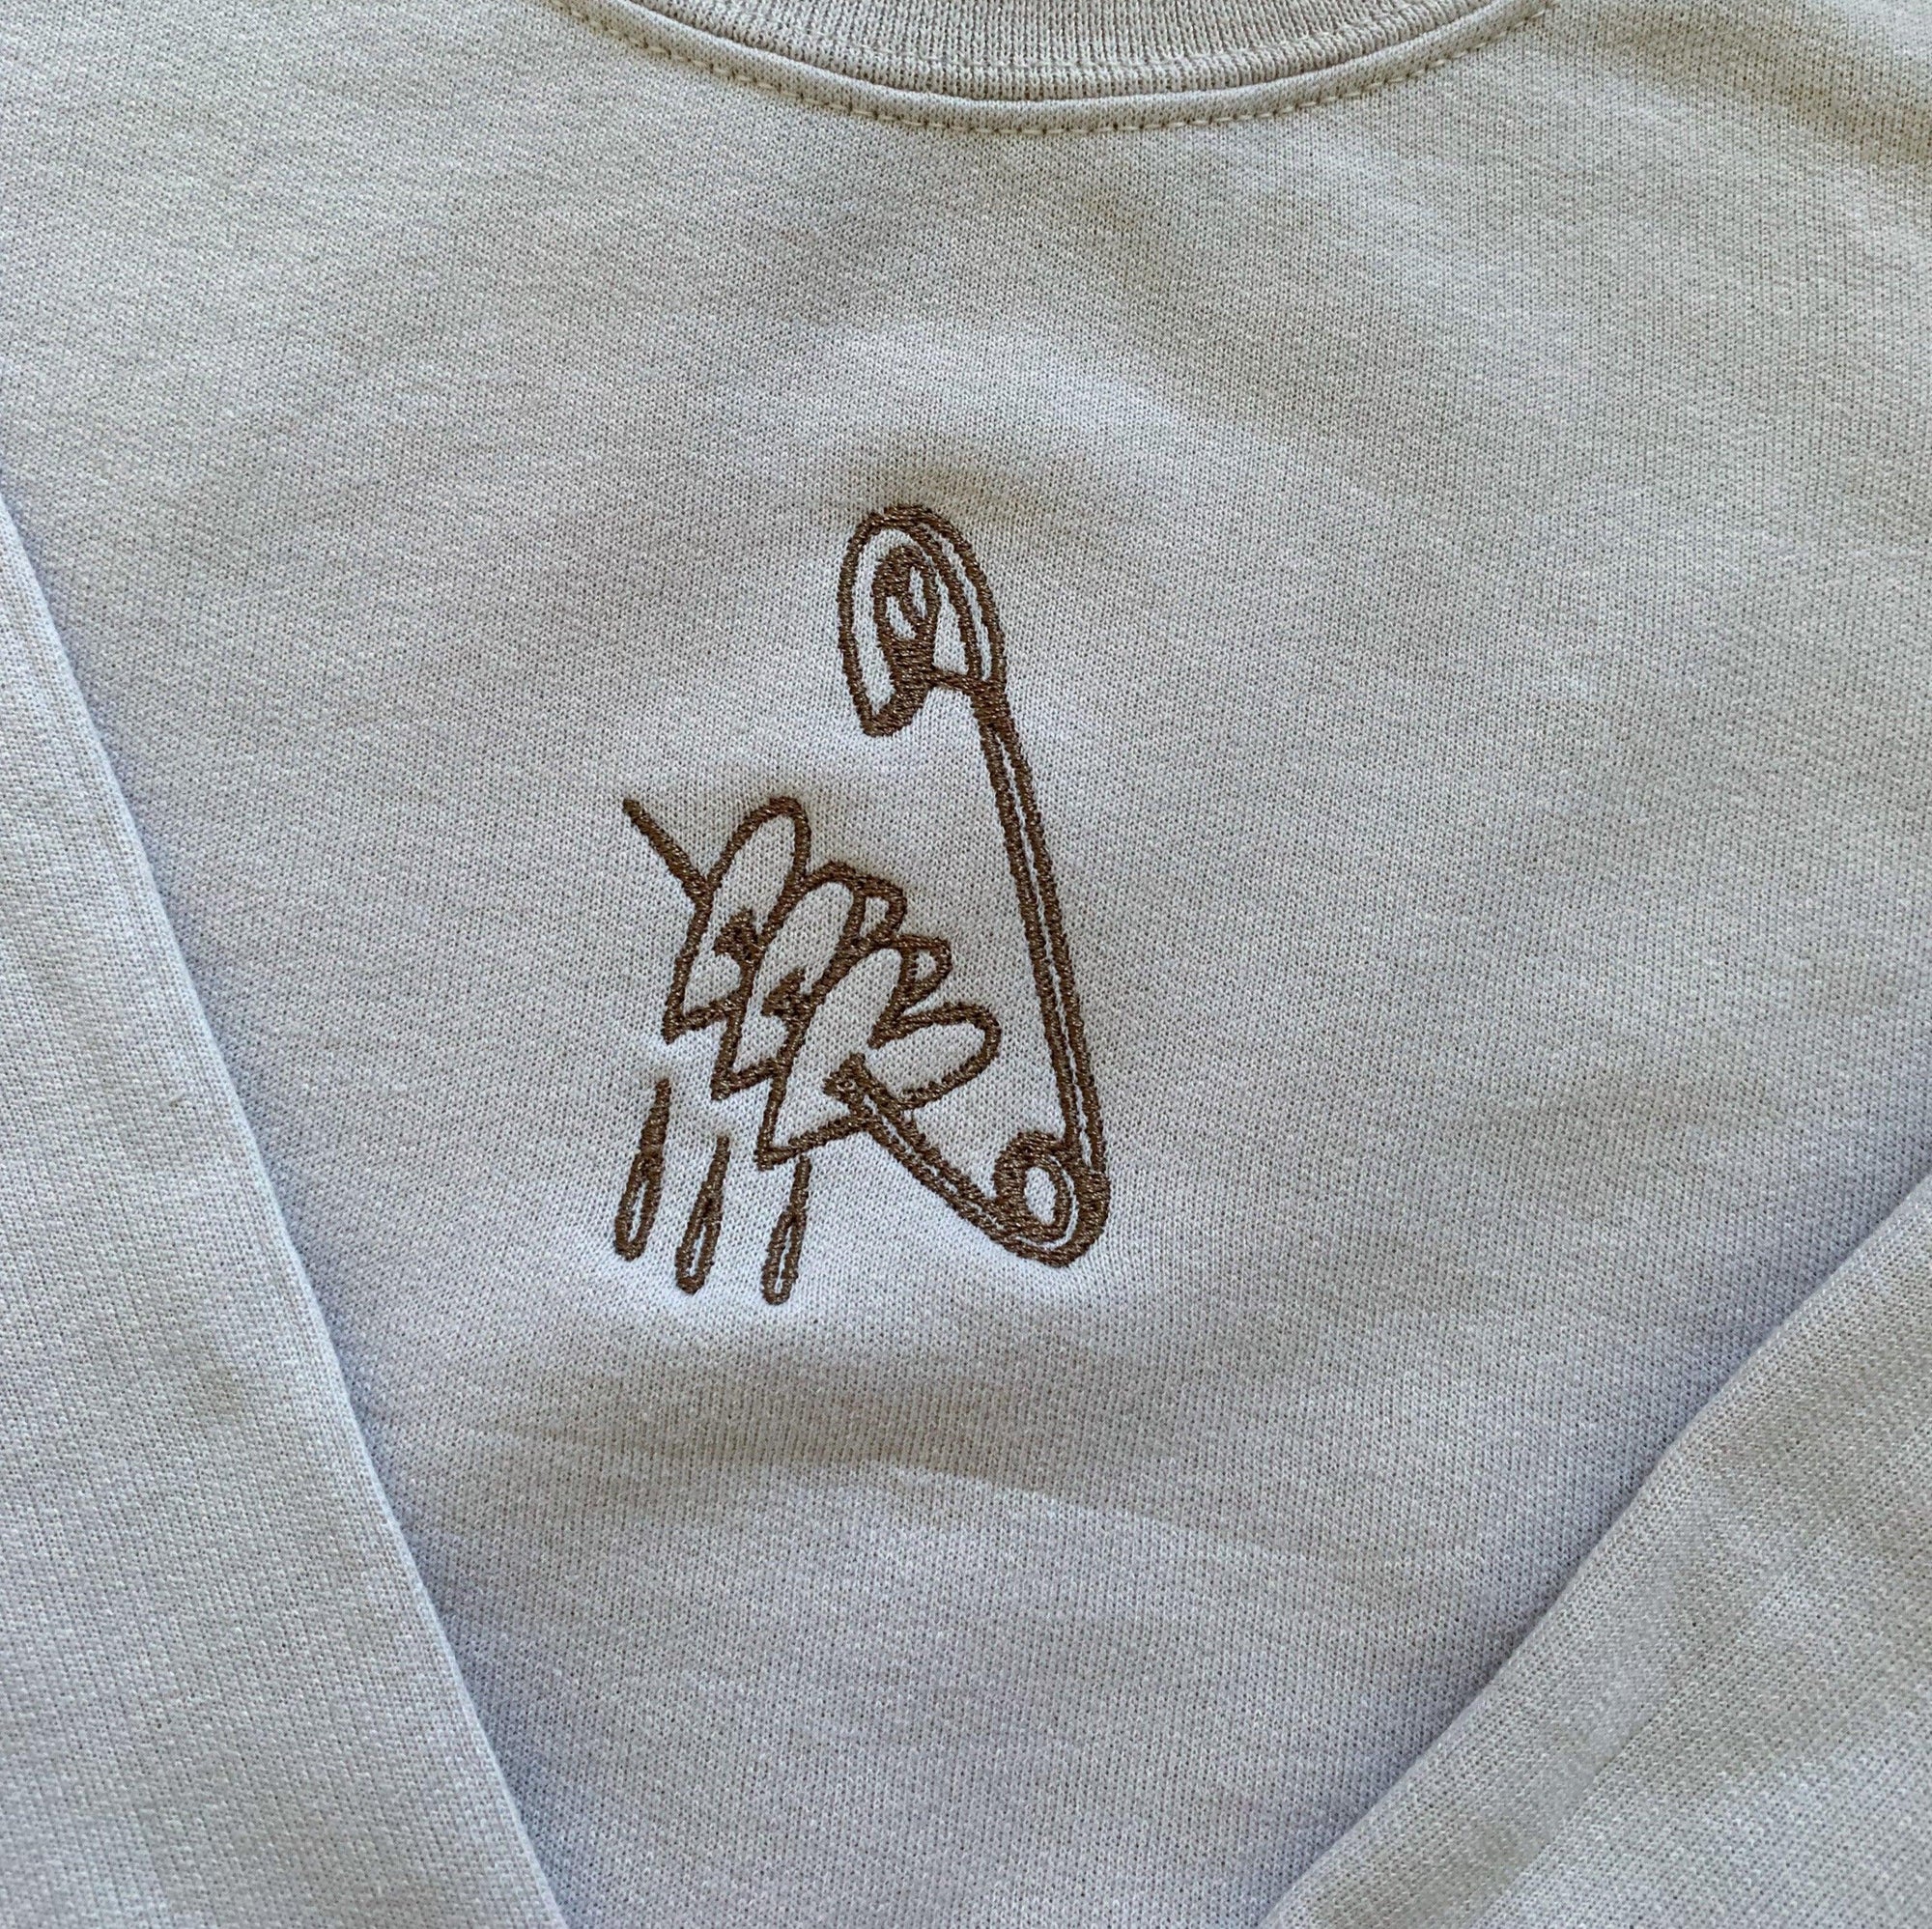 Custom Scissor and Safety Pin Embroidered Matching Set Couple Sweatshirt Hoodies